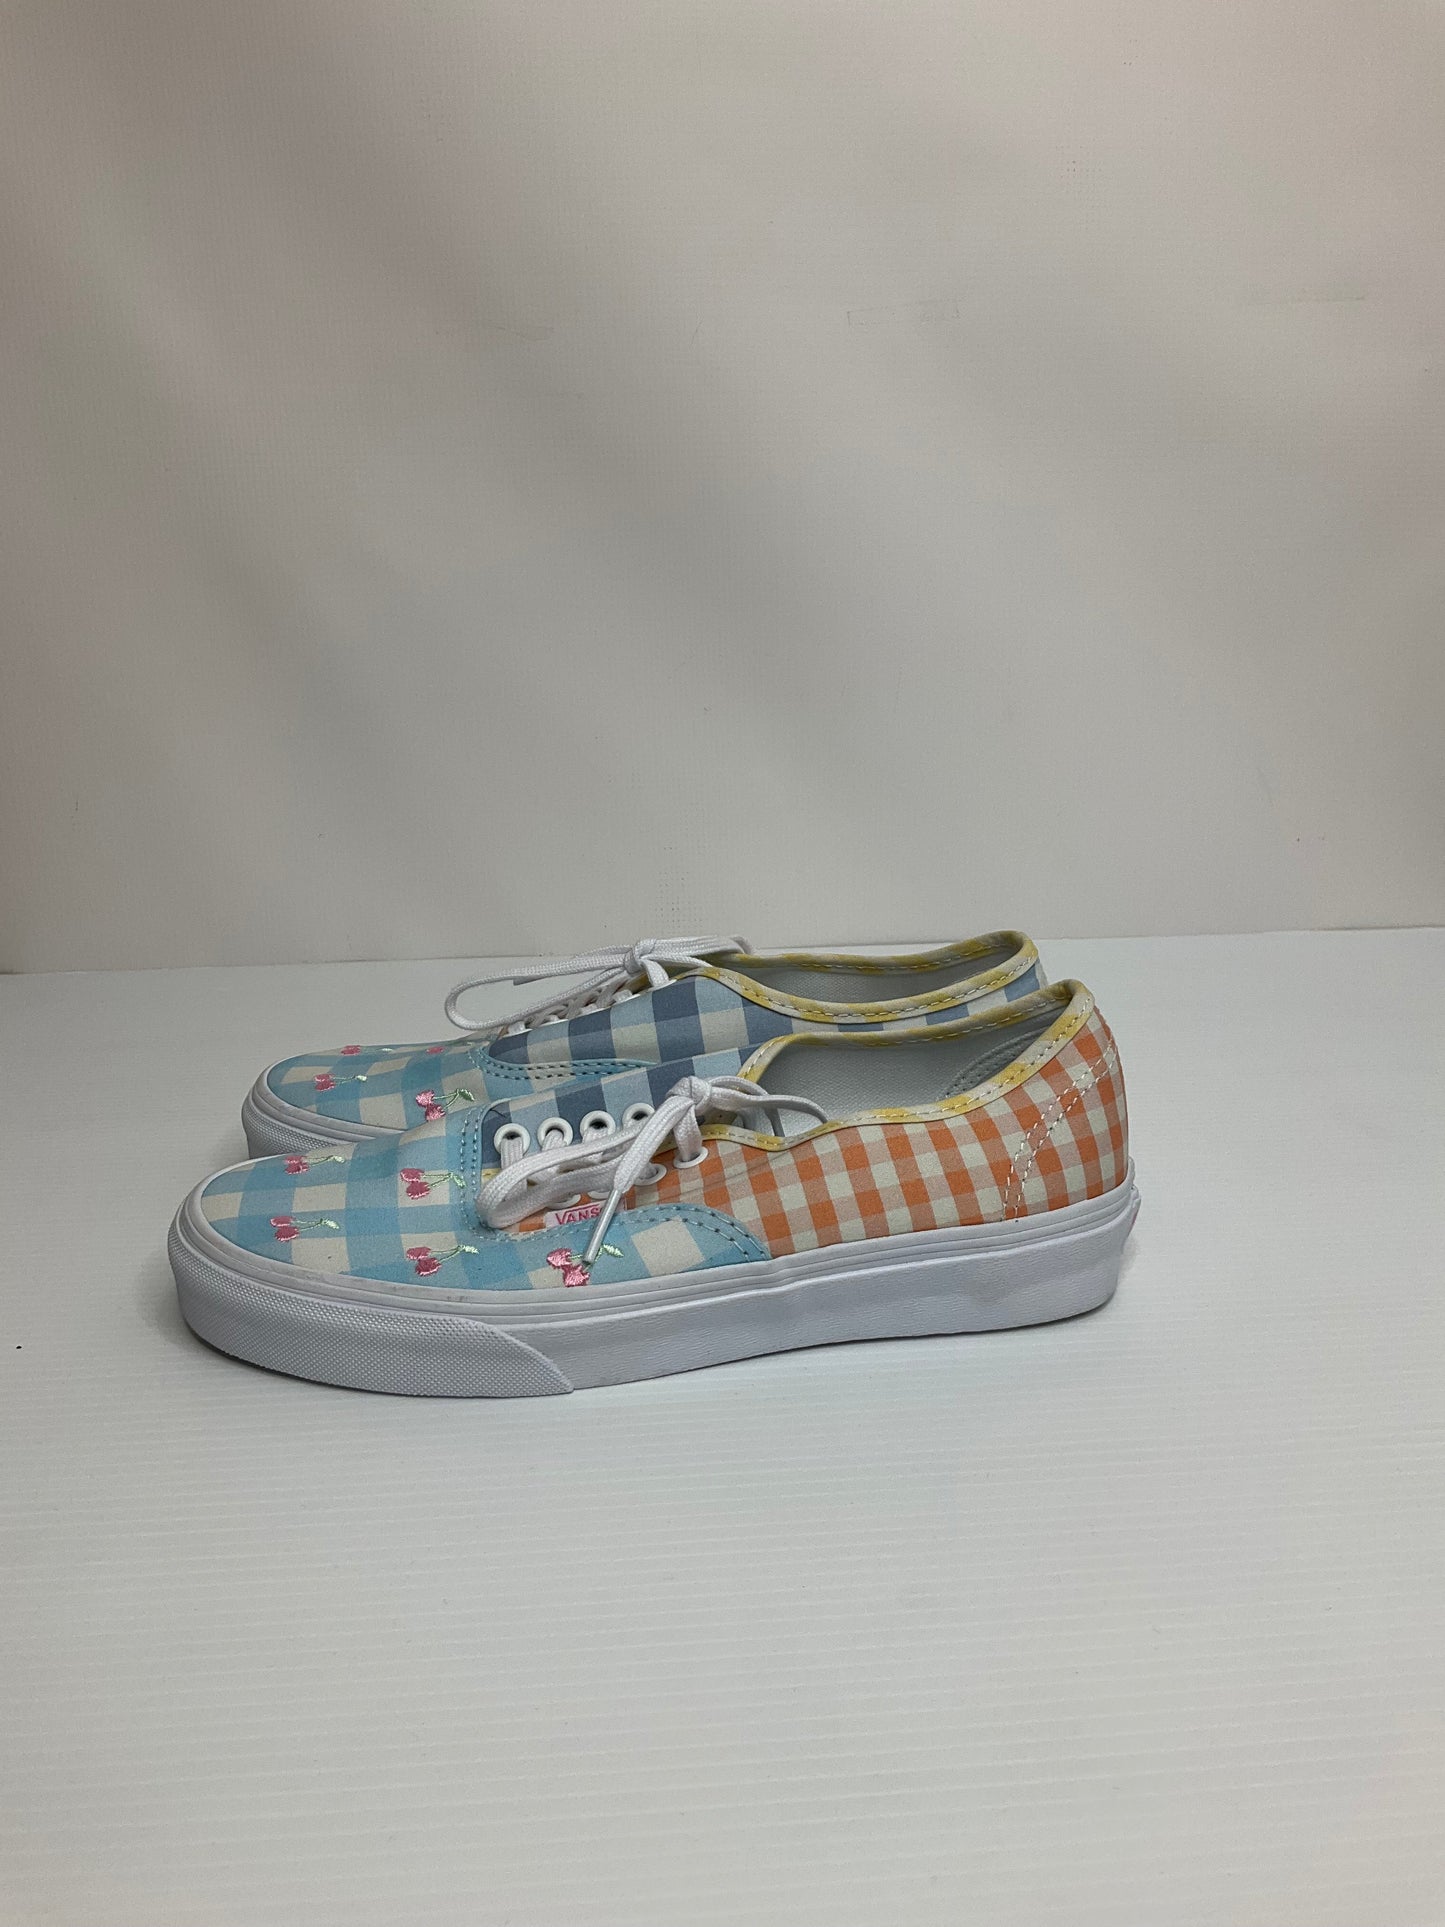 Plaid Pattern Shoes Sneakers Vans, Size 8